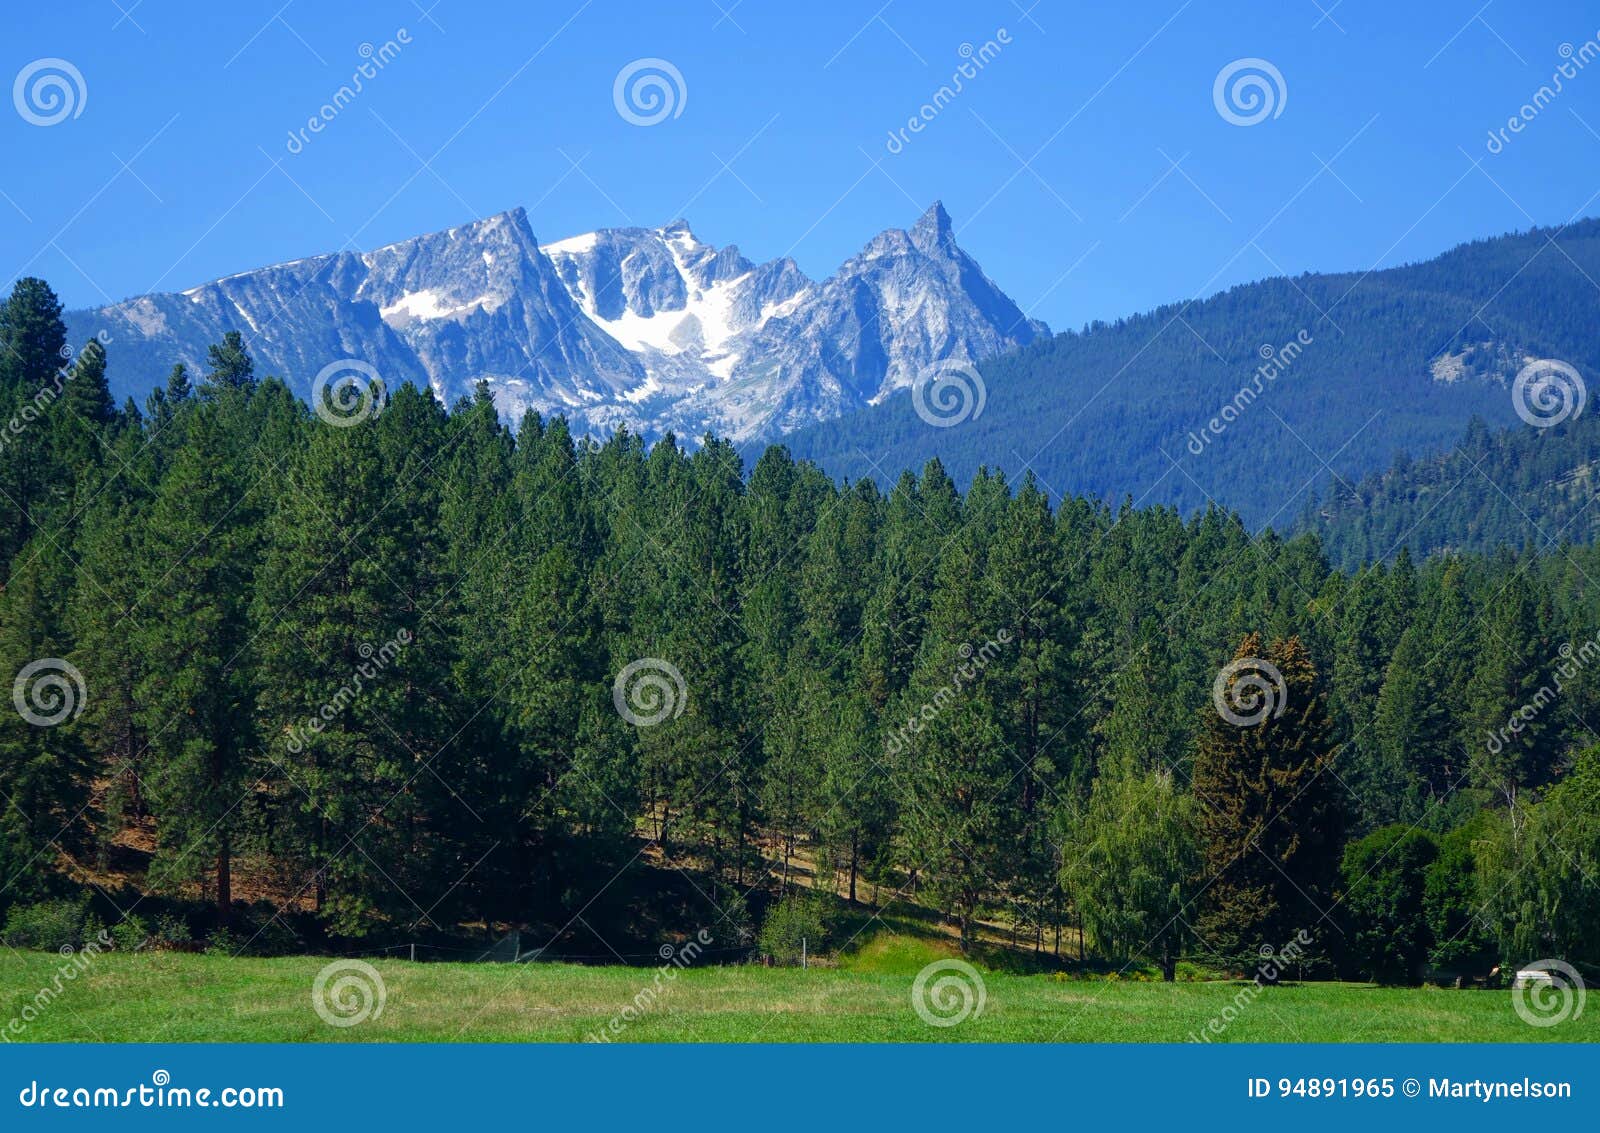 trapper peak, bitterroot mountains - montana